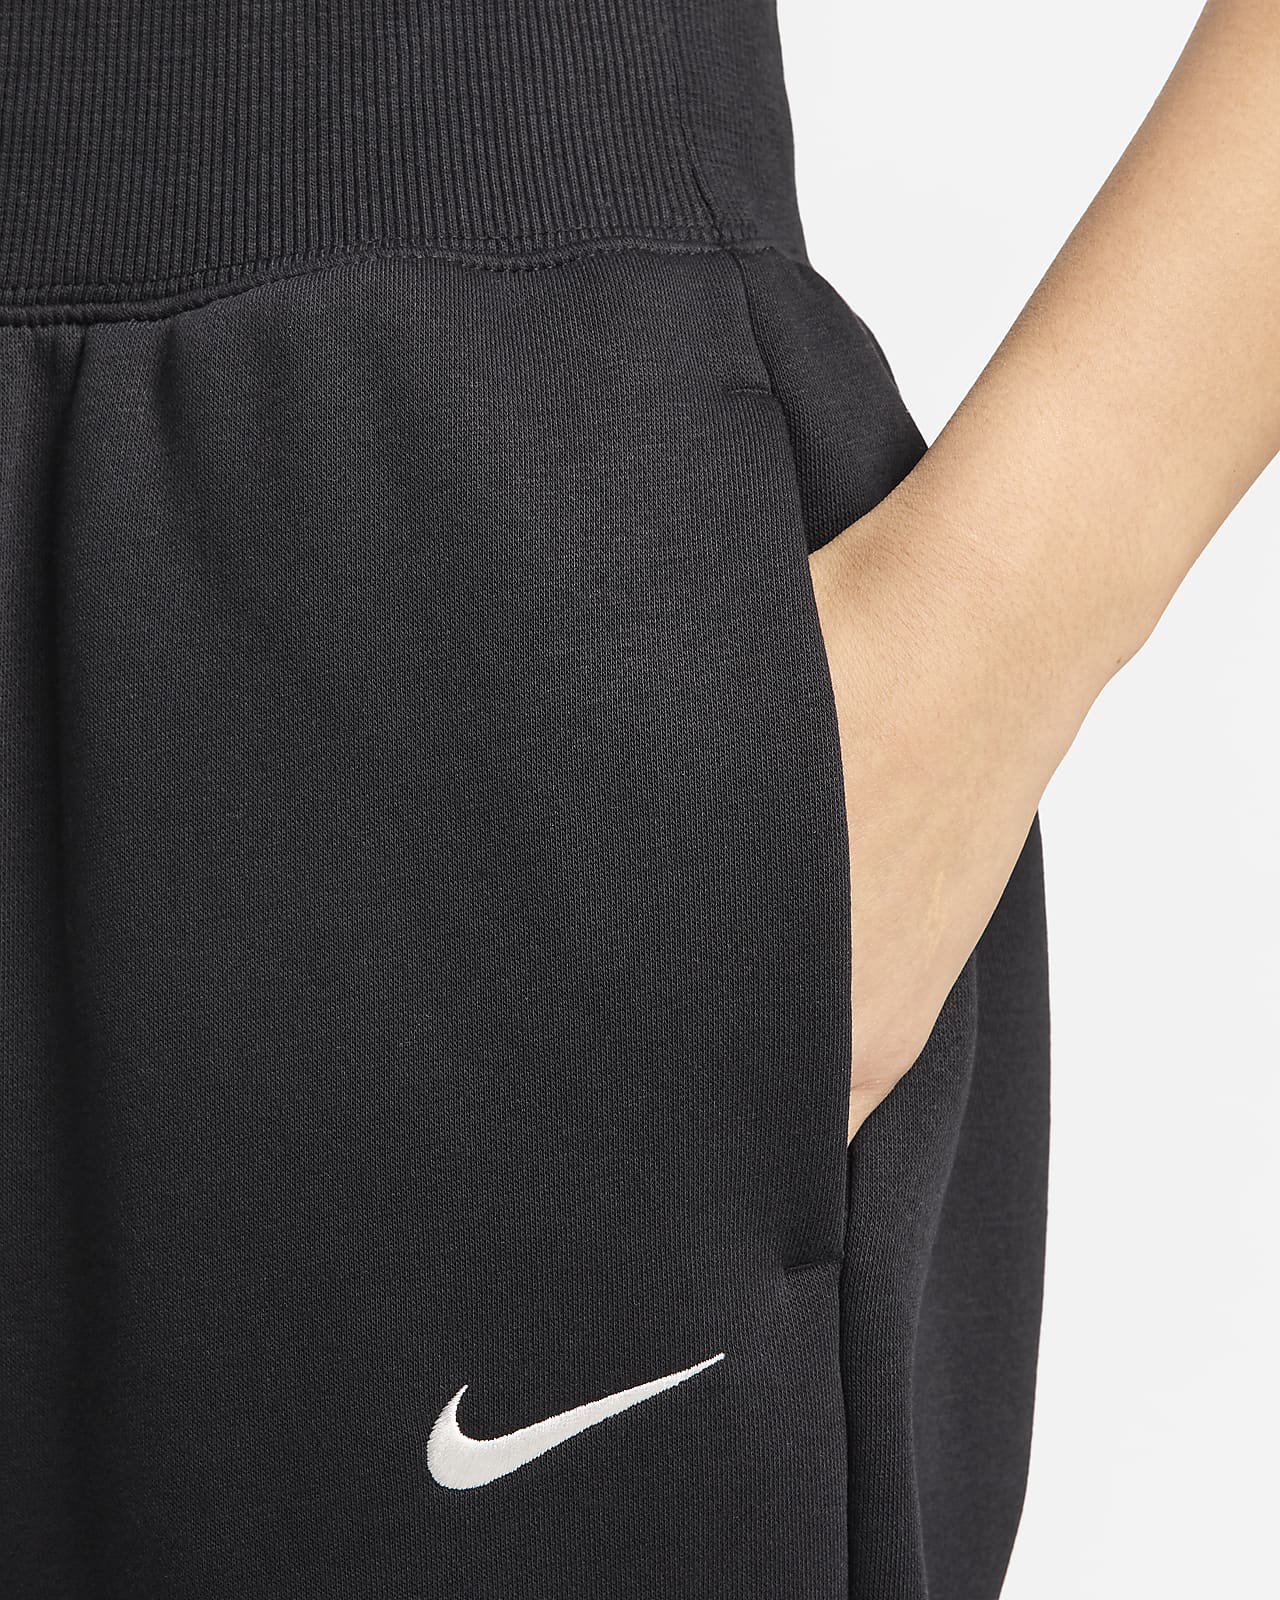 Nike Womens Style Fleece High Rise Pants